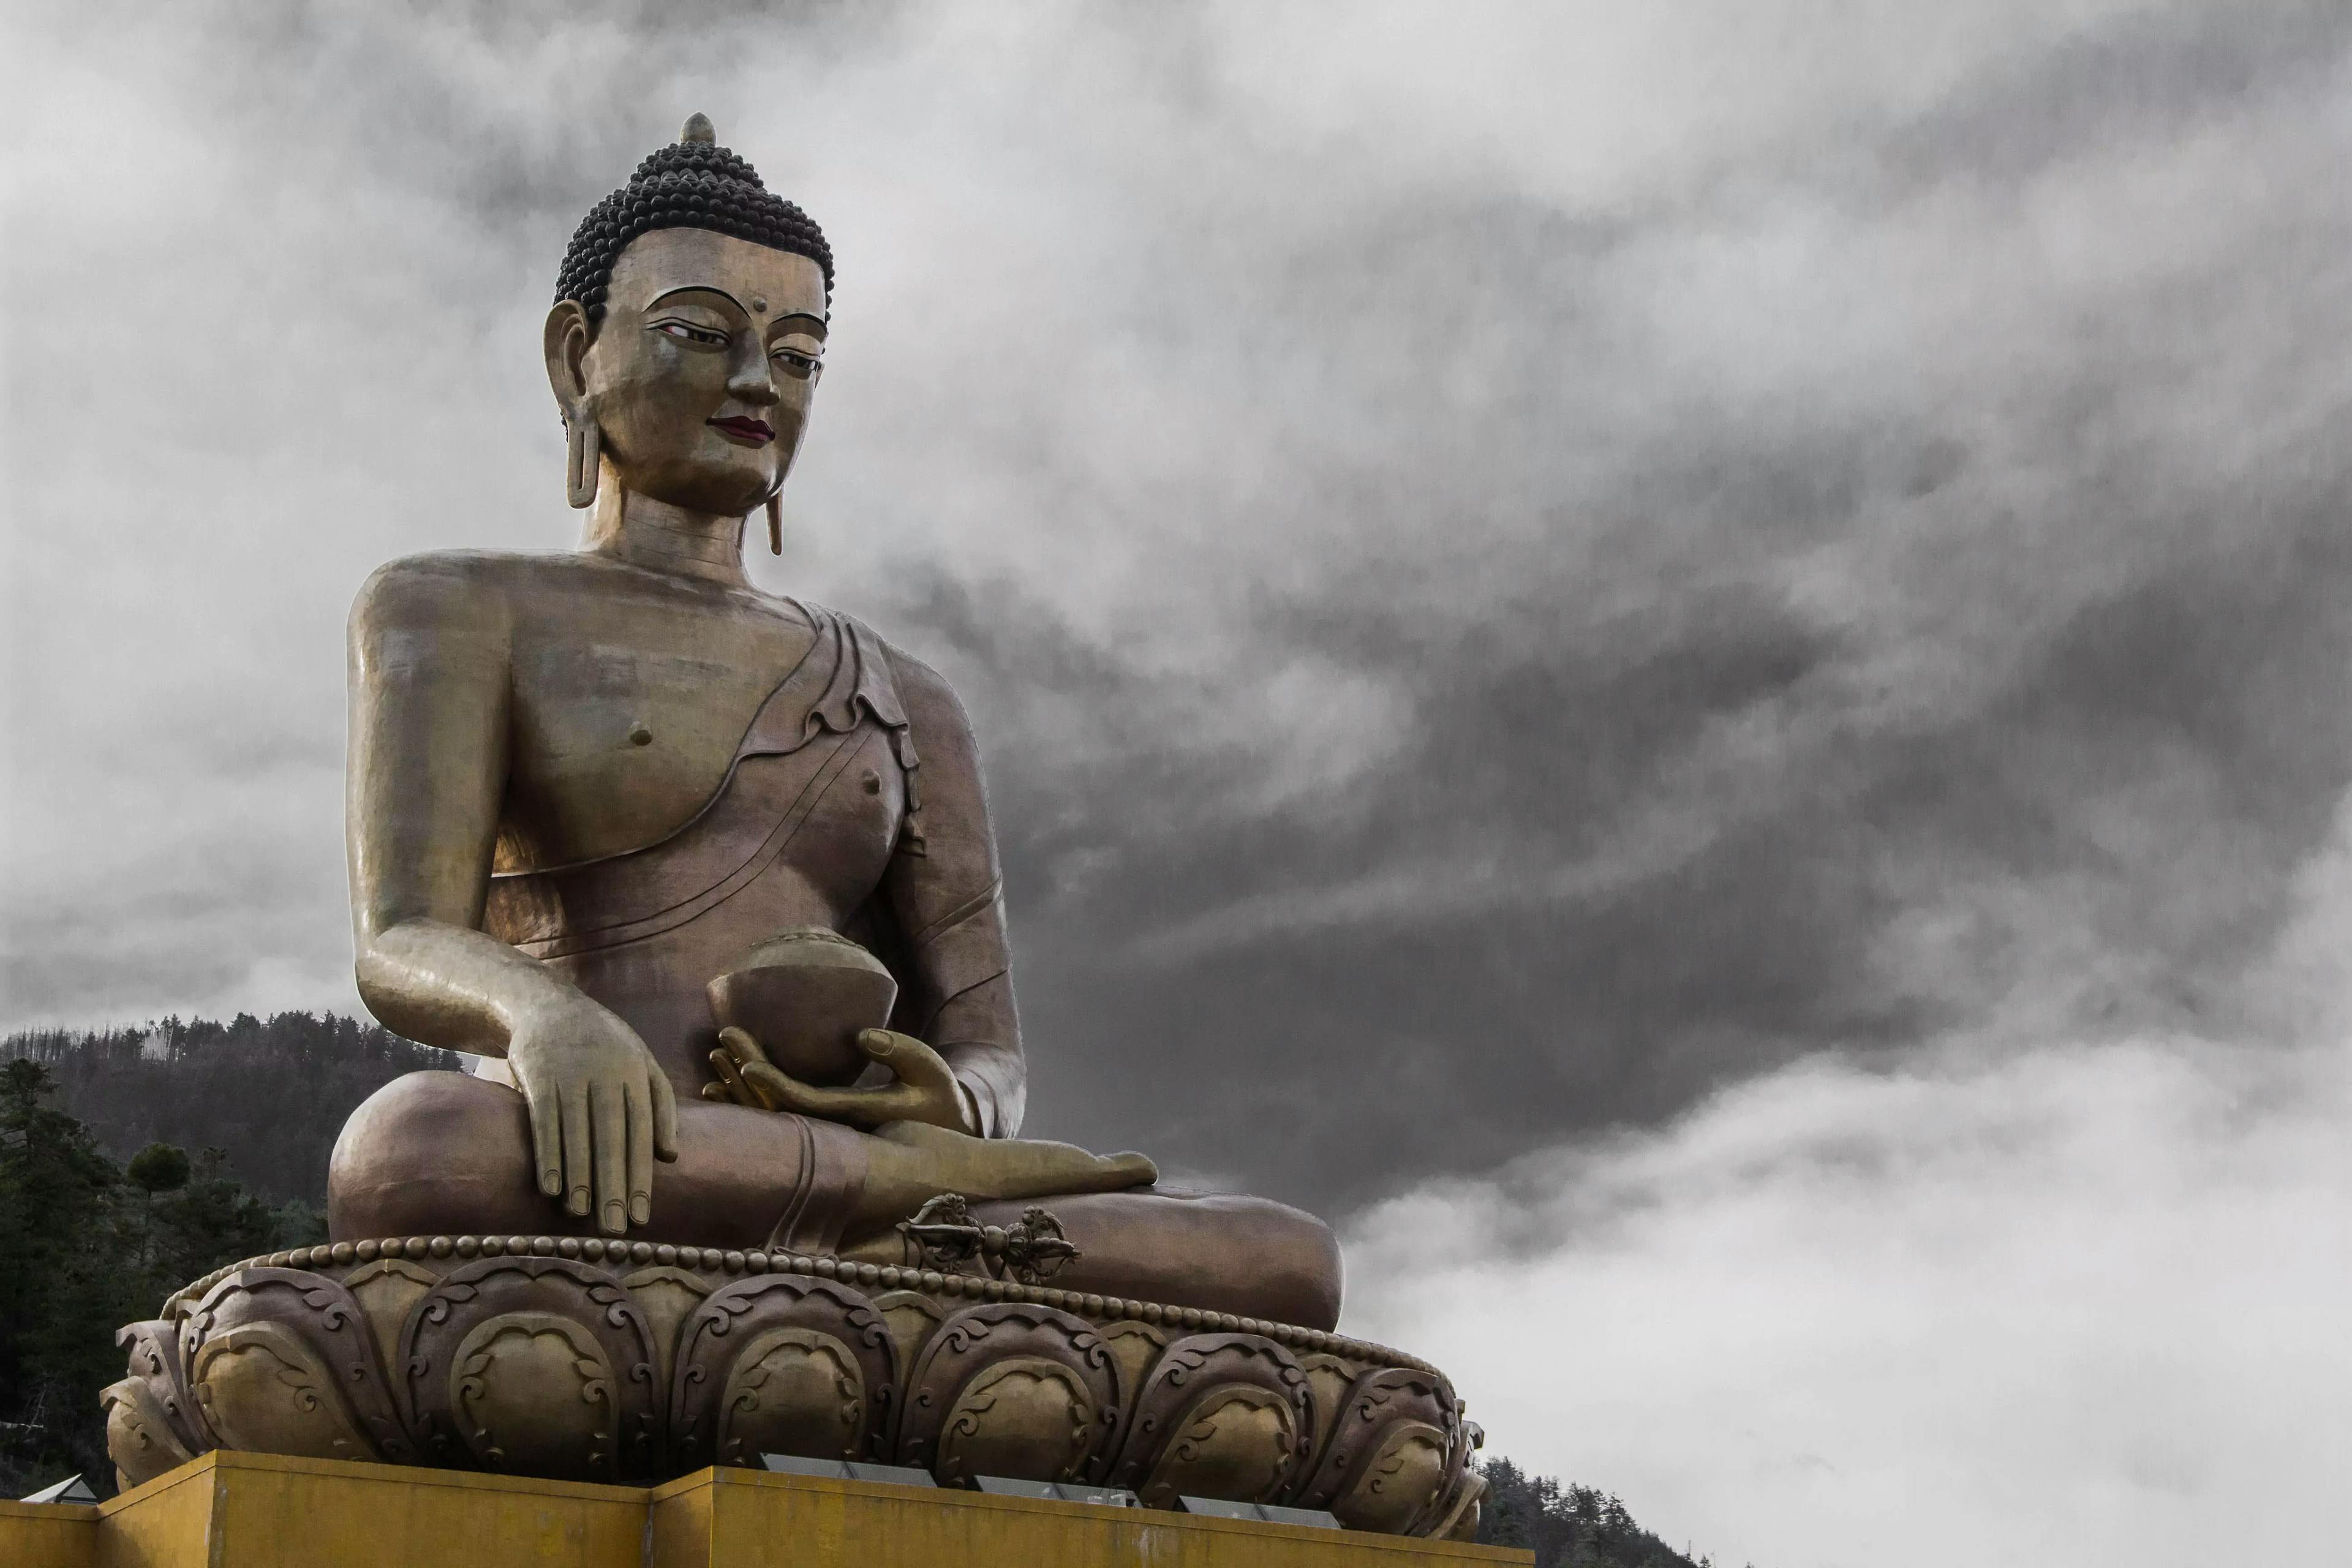 BHUTAN Tours: Scenic Beauty Captured in Bhutan's Majestic Landscapes